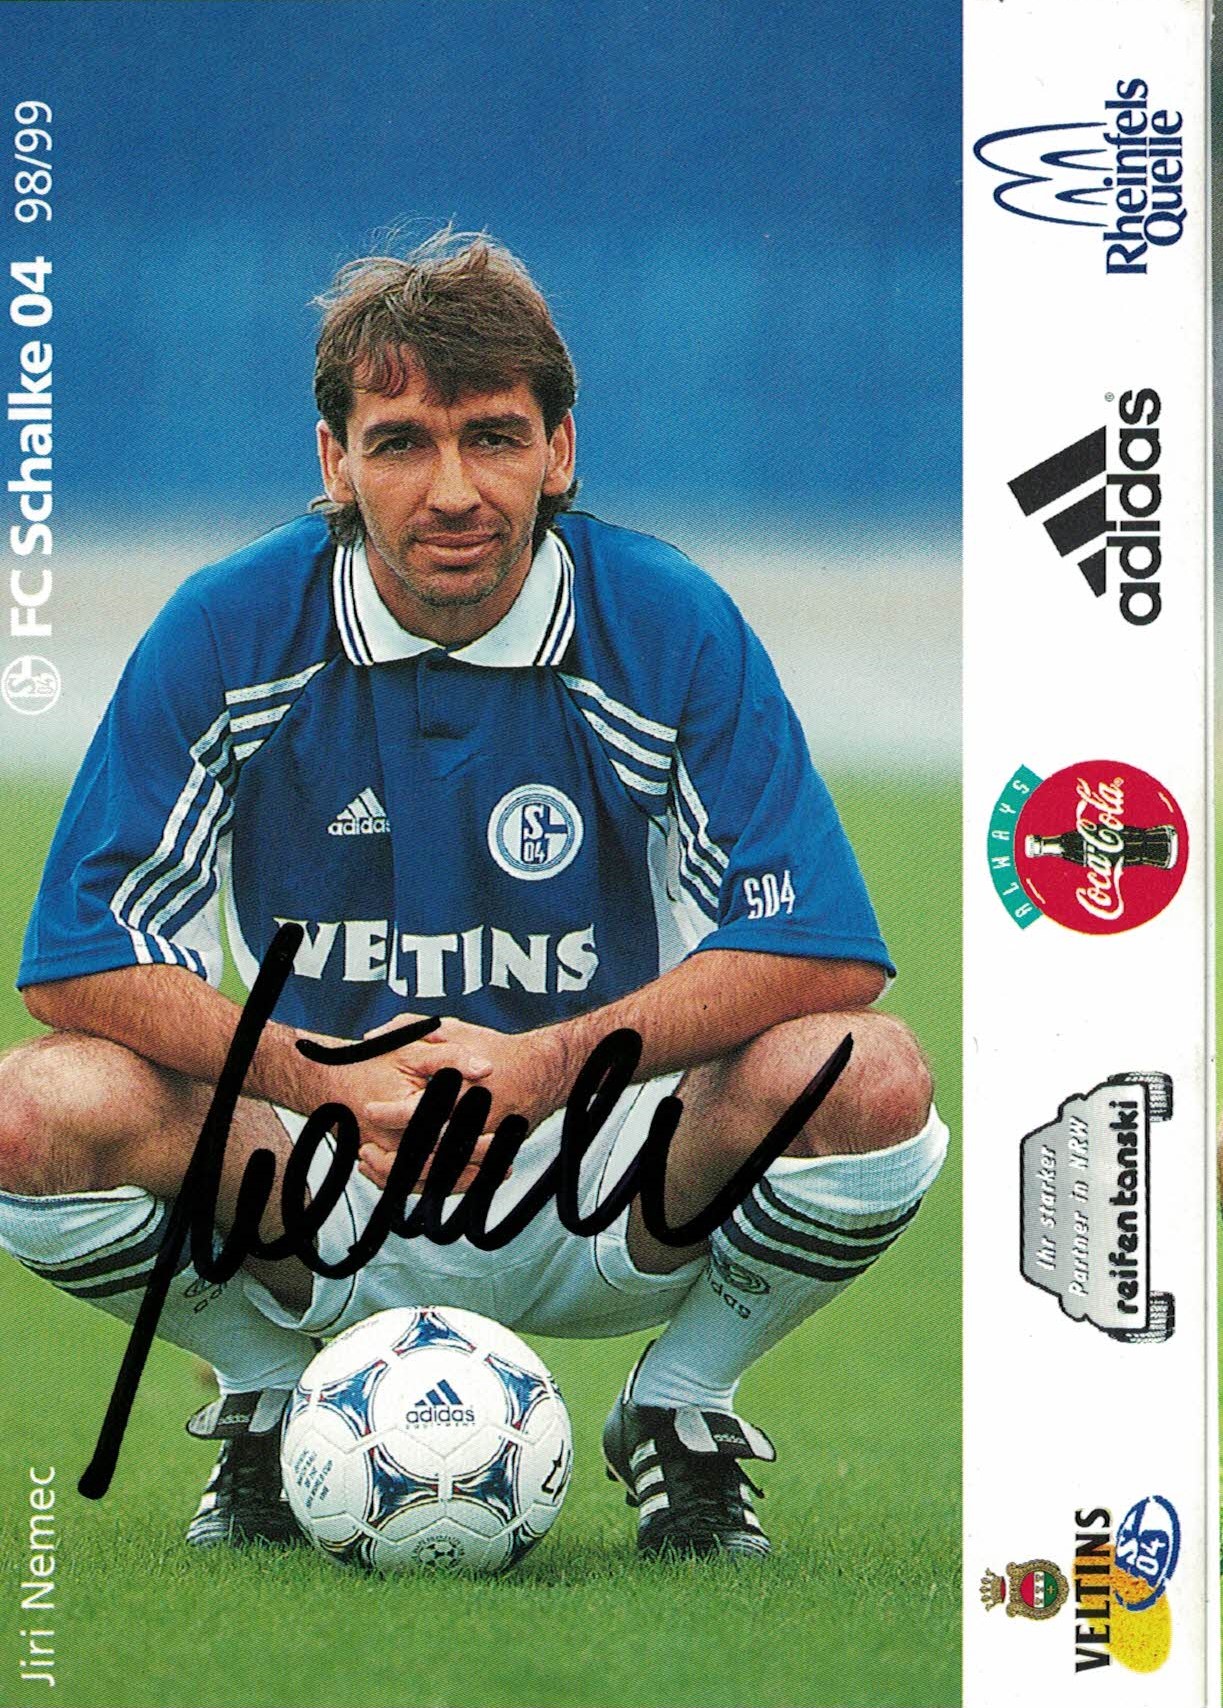 Jiri Nemec Schalke 04 1998/99 Podpisova karta autogram